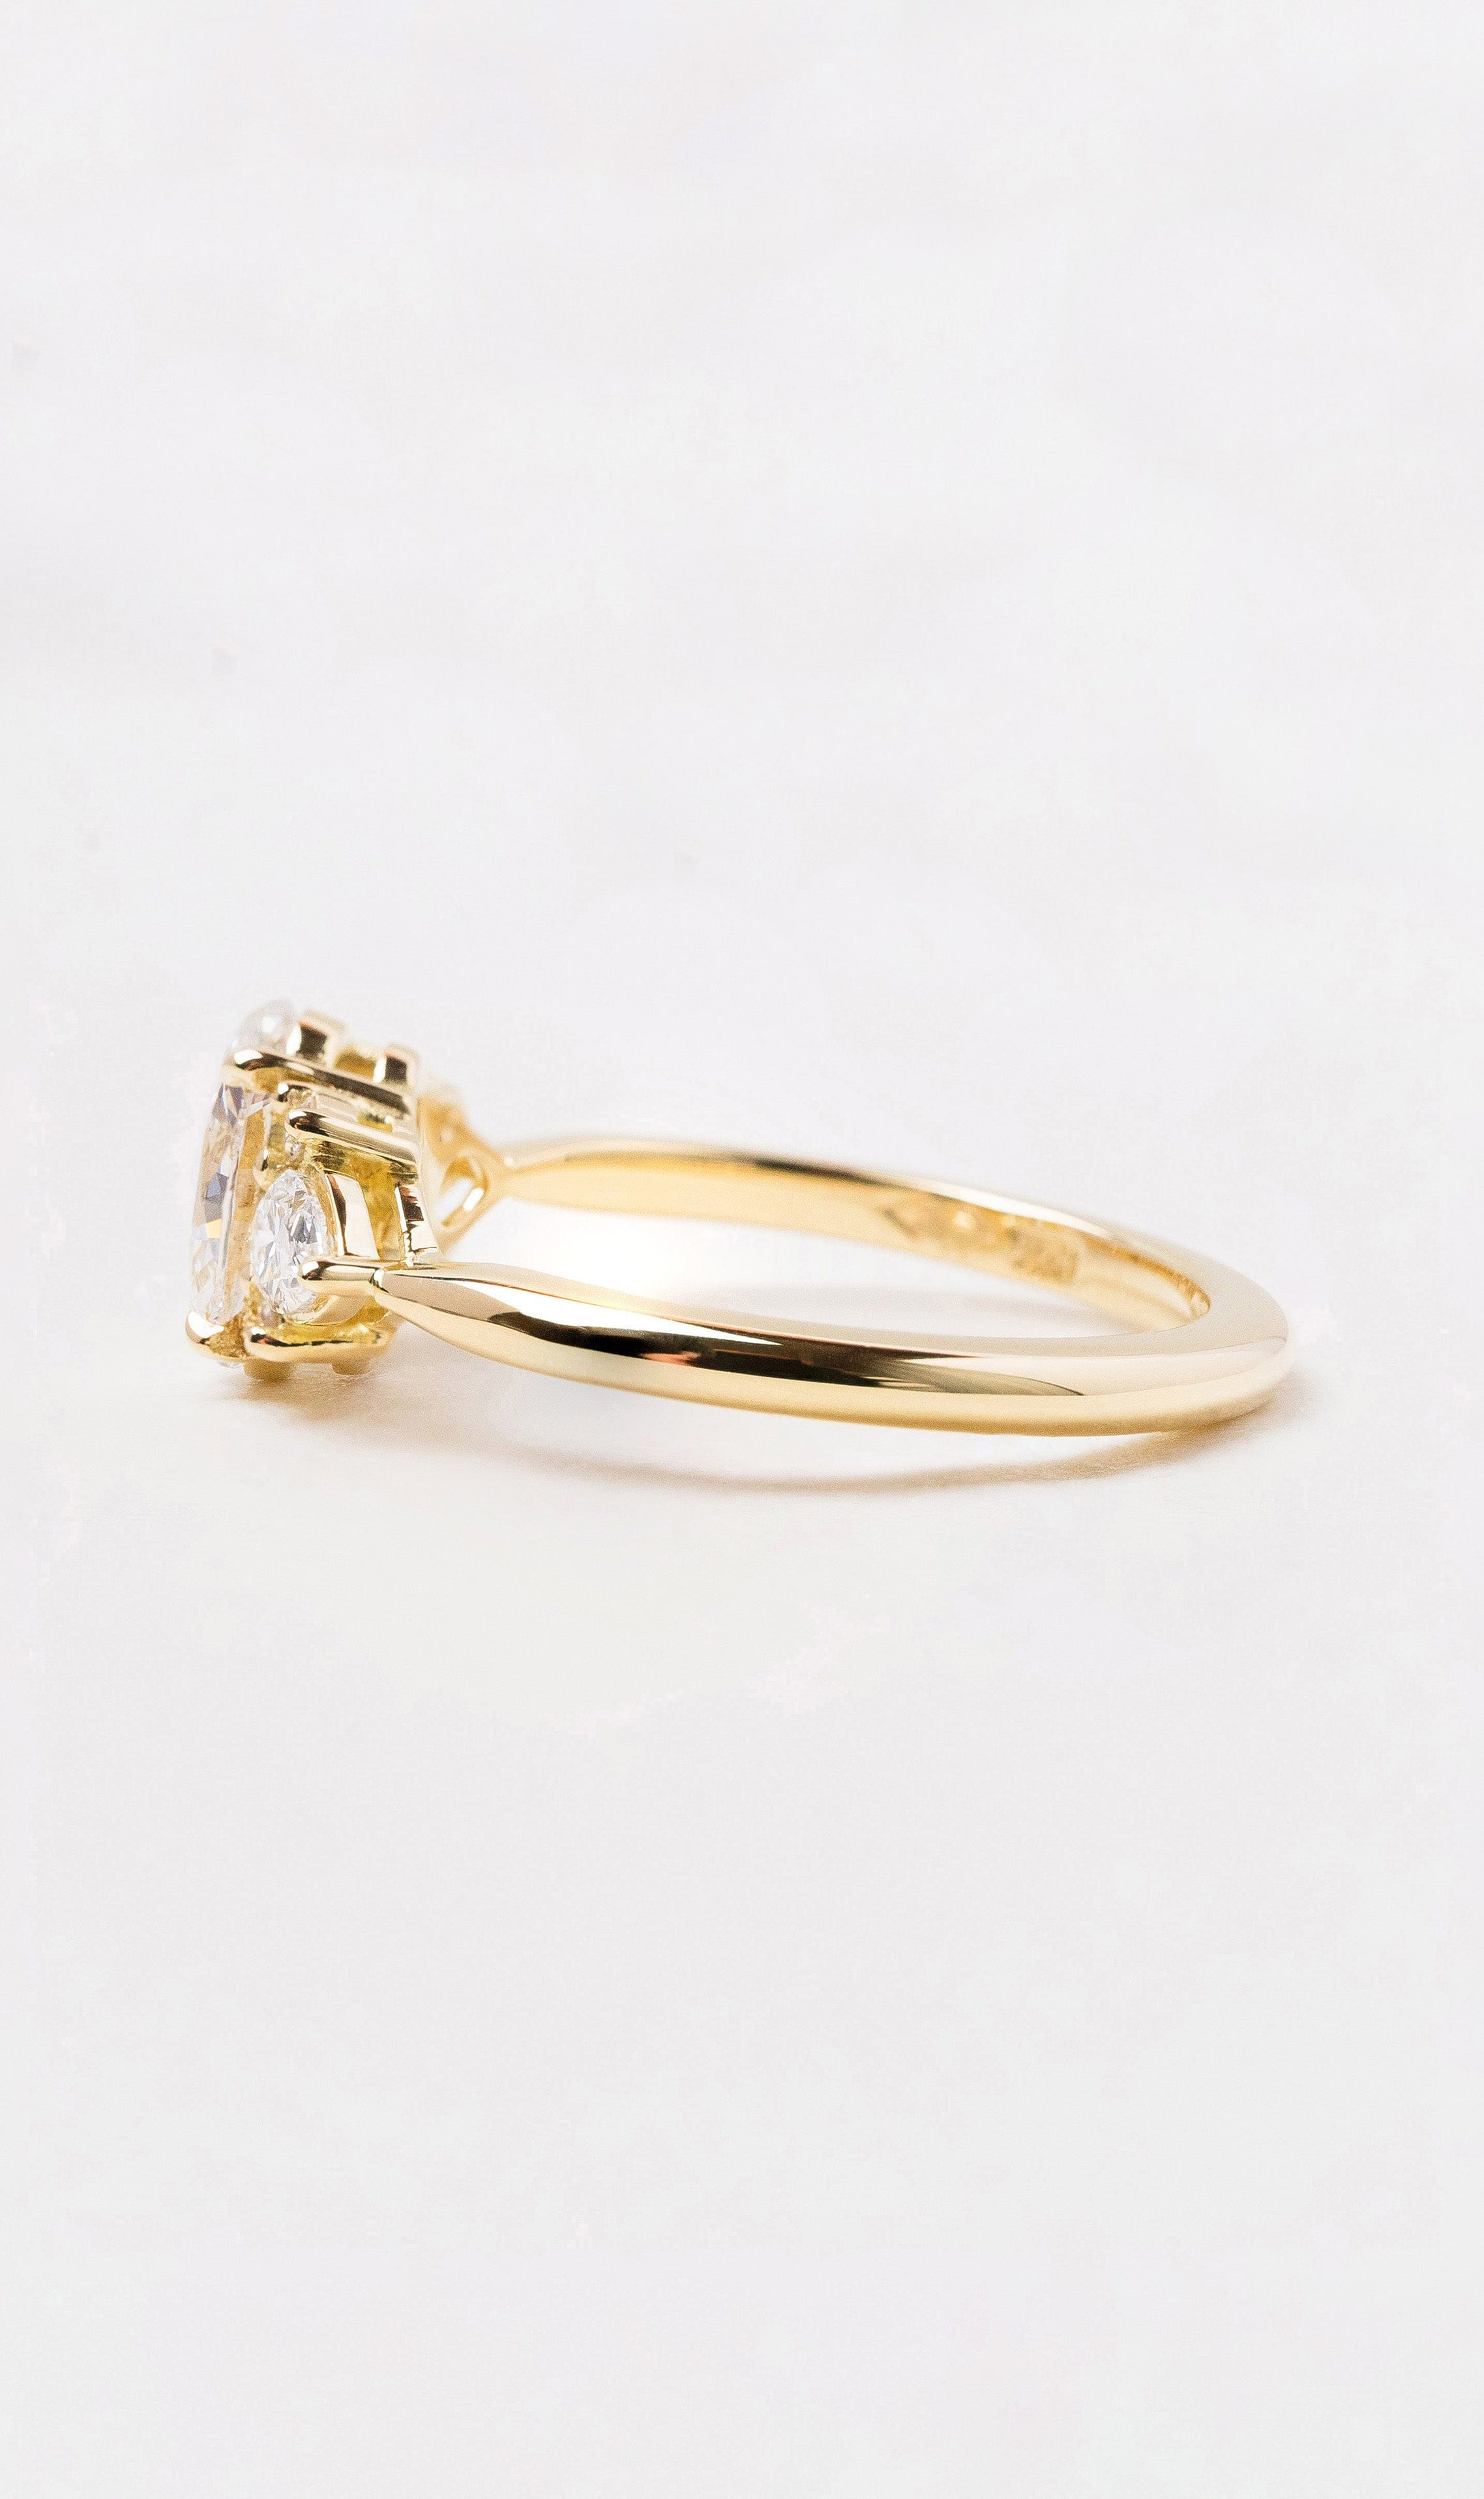 Hogans Family Jewellers 18K YG Vintage Style Diamond Ring